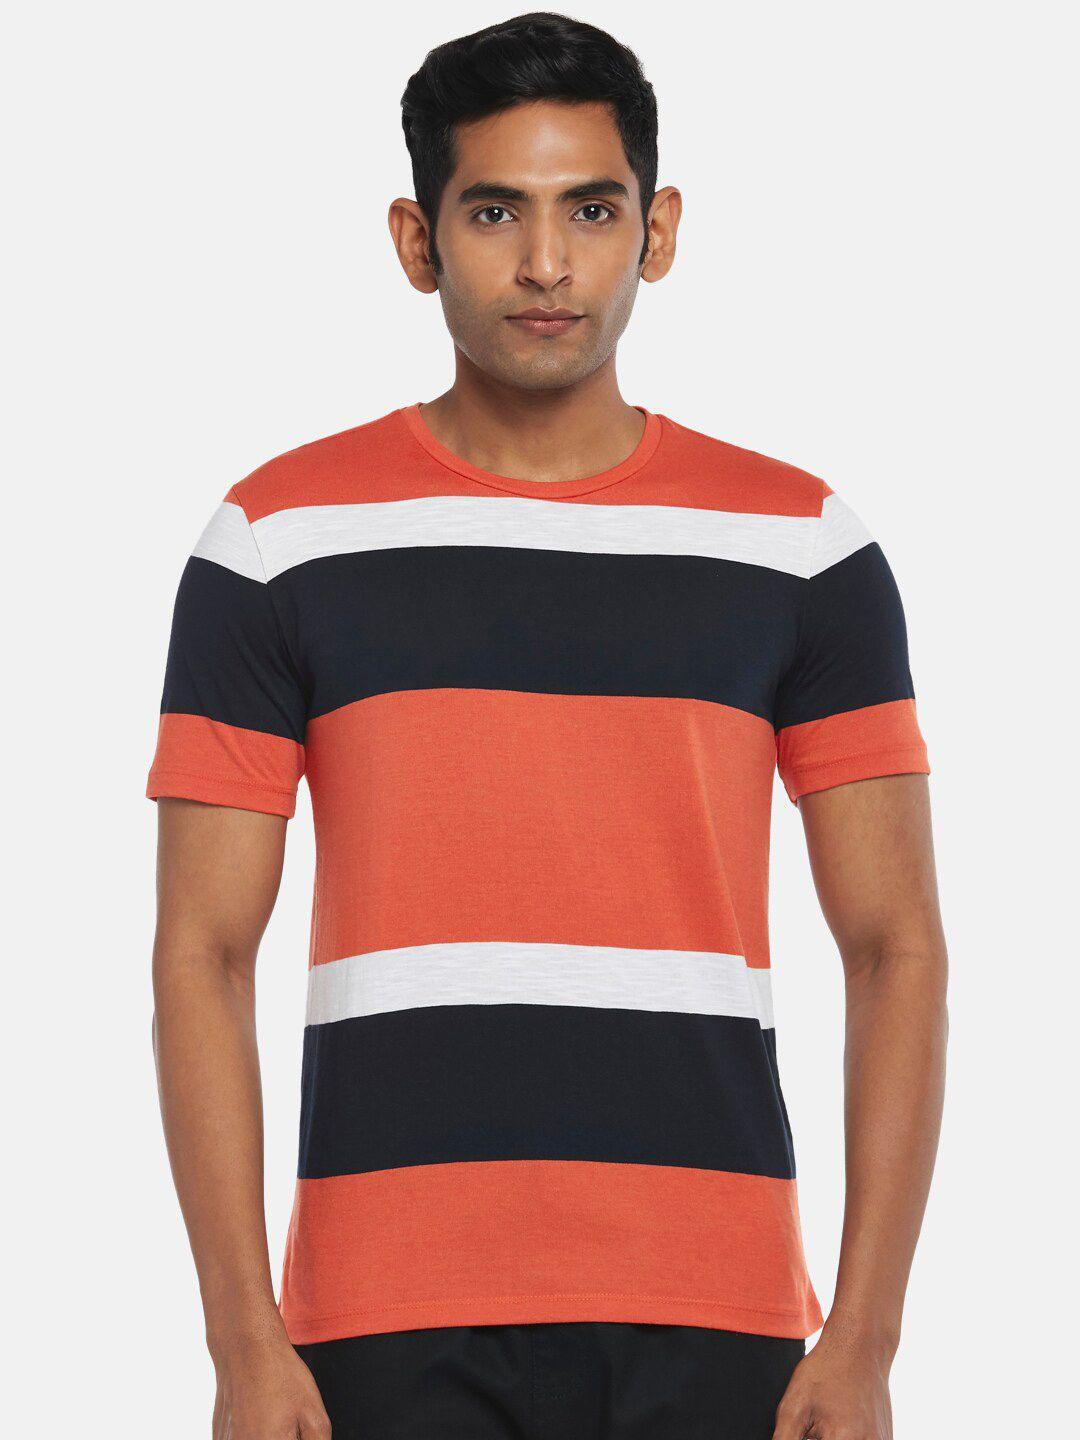 urban ranger by pantaloons men multicoloured striped slim fit t-shirt